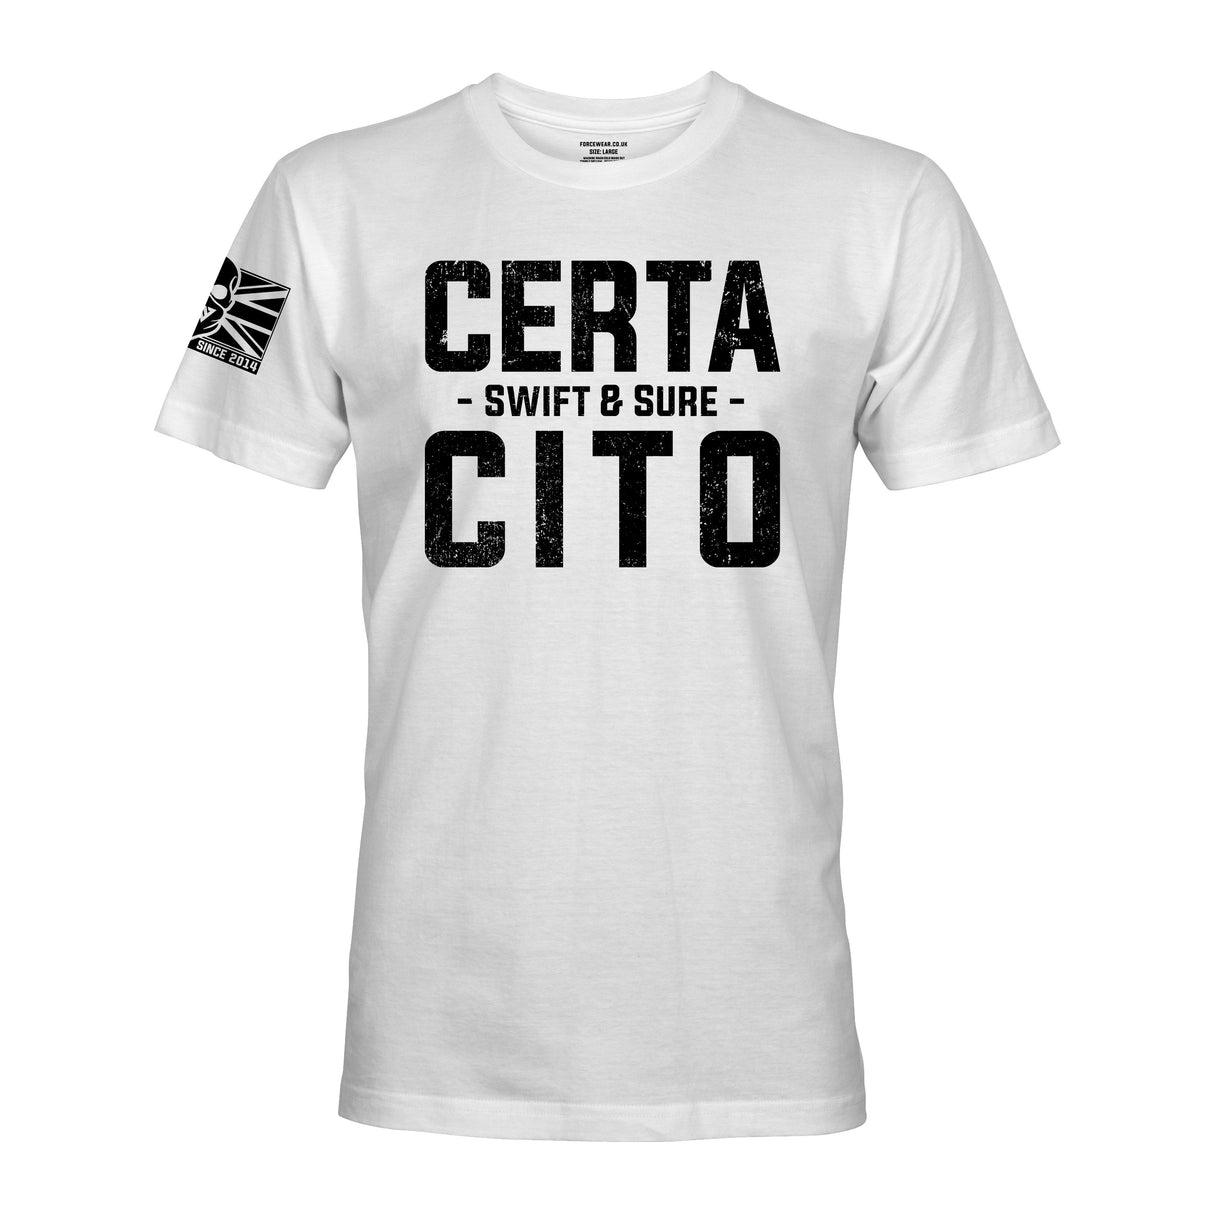 CERTA CITO (SIGNALS) - Force Wear HQ - T-SHIRTS